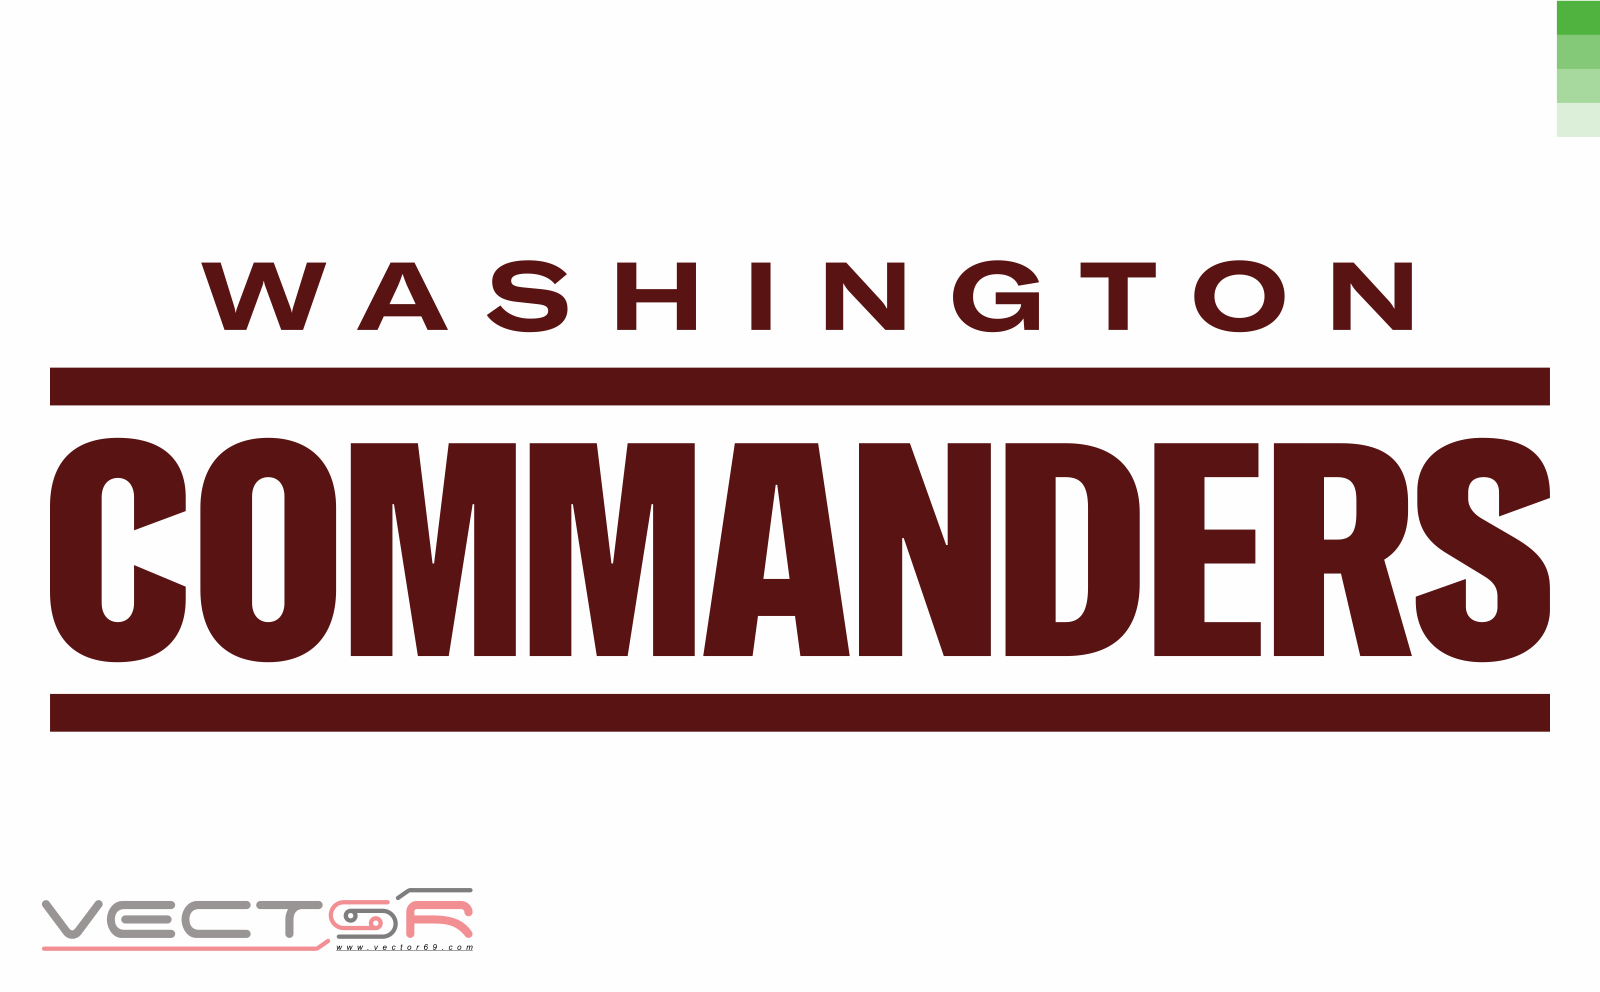 Washington Commanders Wordmark - Download Vector File CDR (CorelDraw)